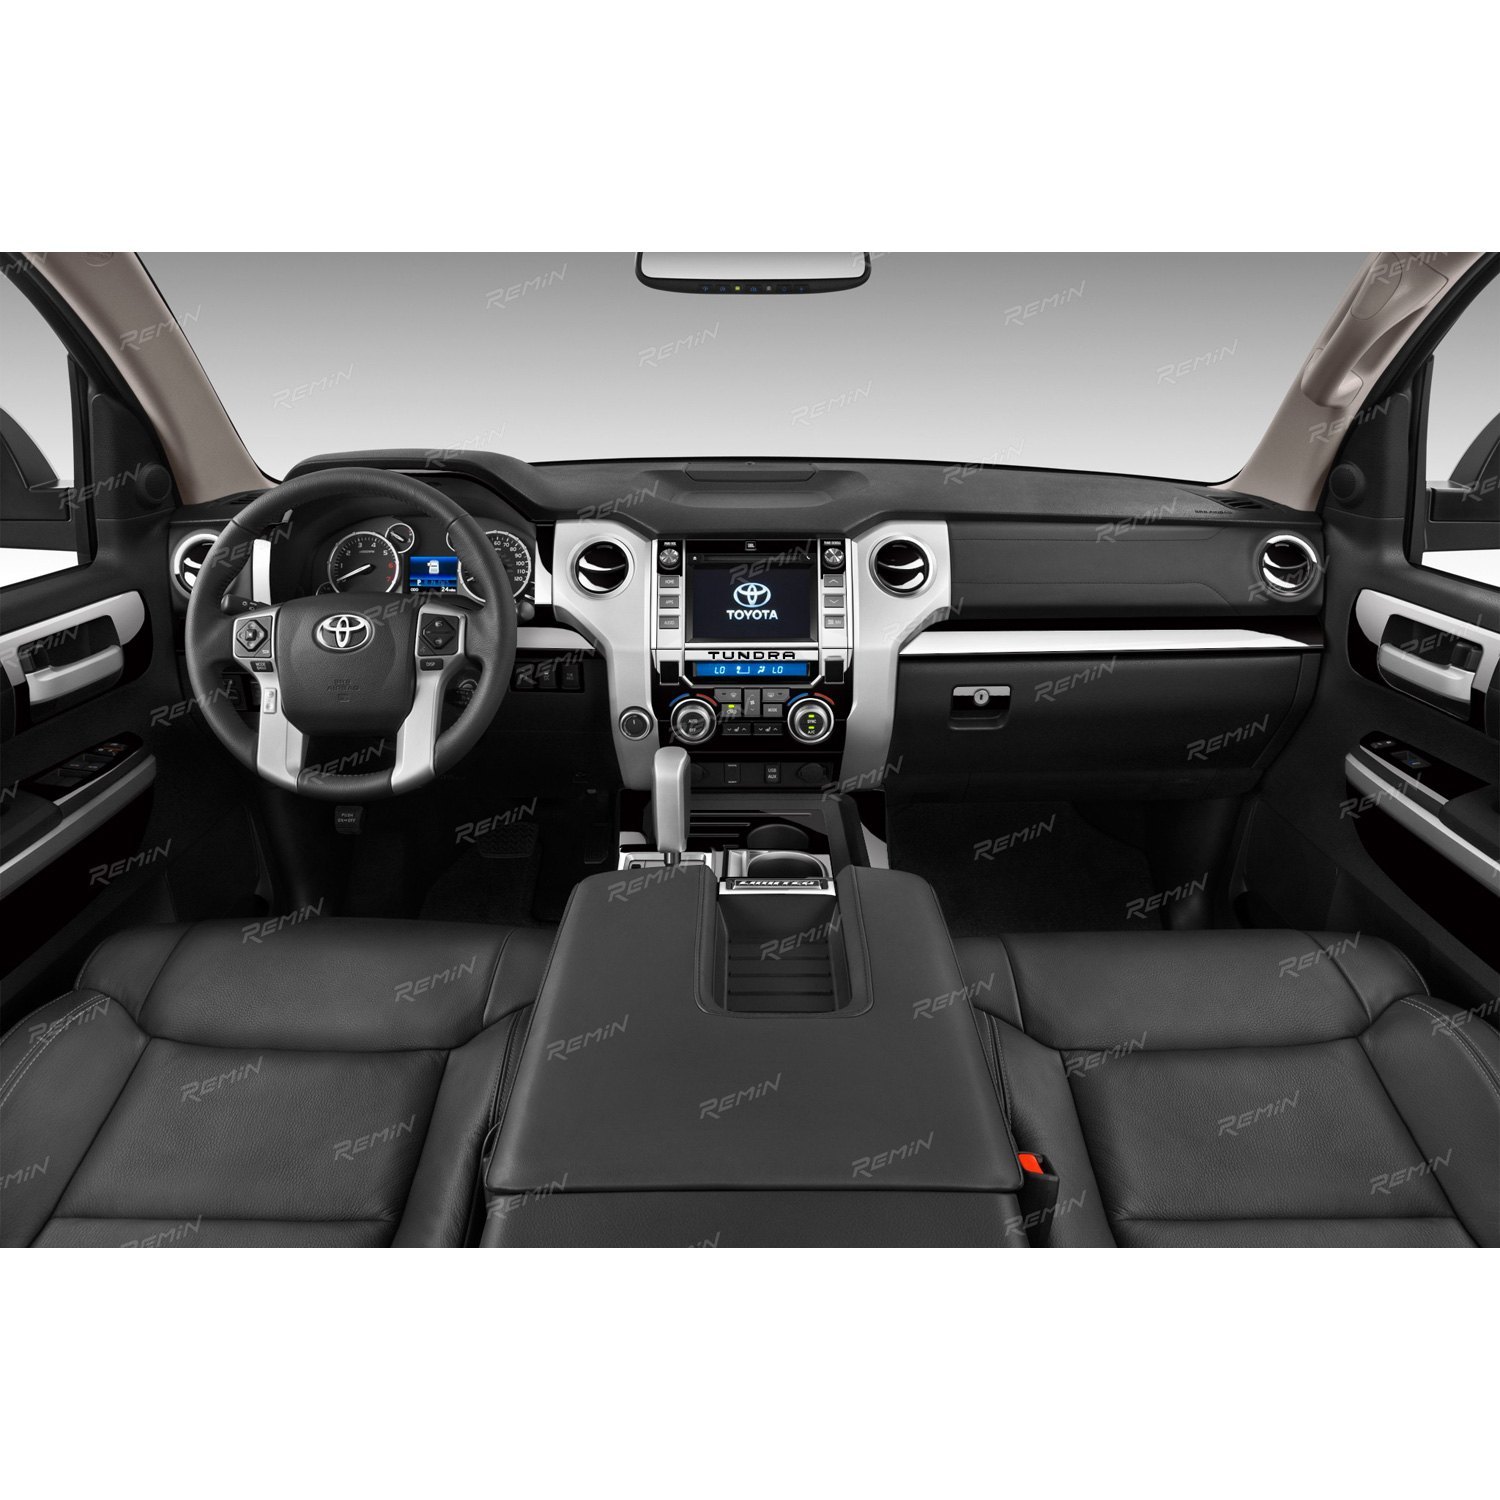 Interior BURL Wood Dash Trim KIT Set for Toyota Tundra Crew CAB 2014 2018 2019 2020 SR5 Limited